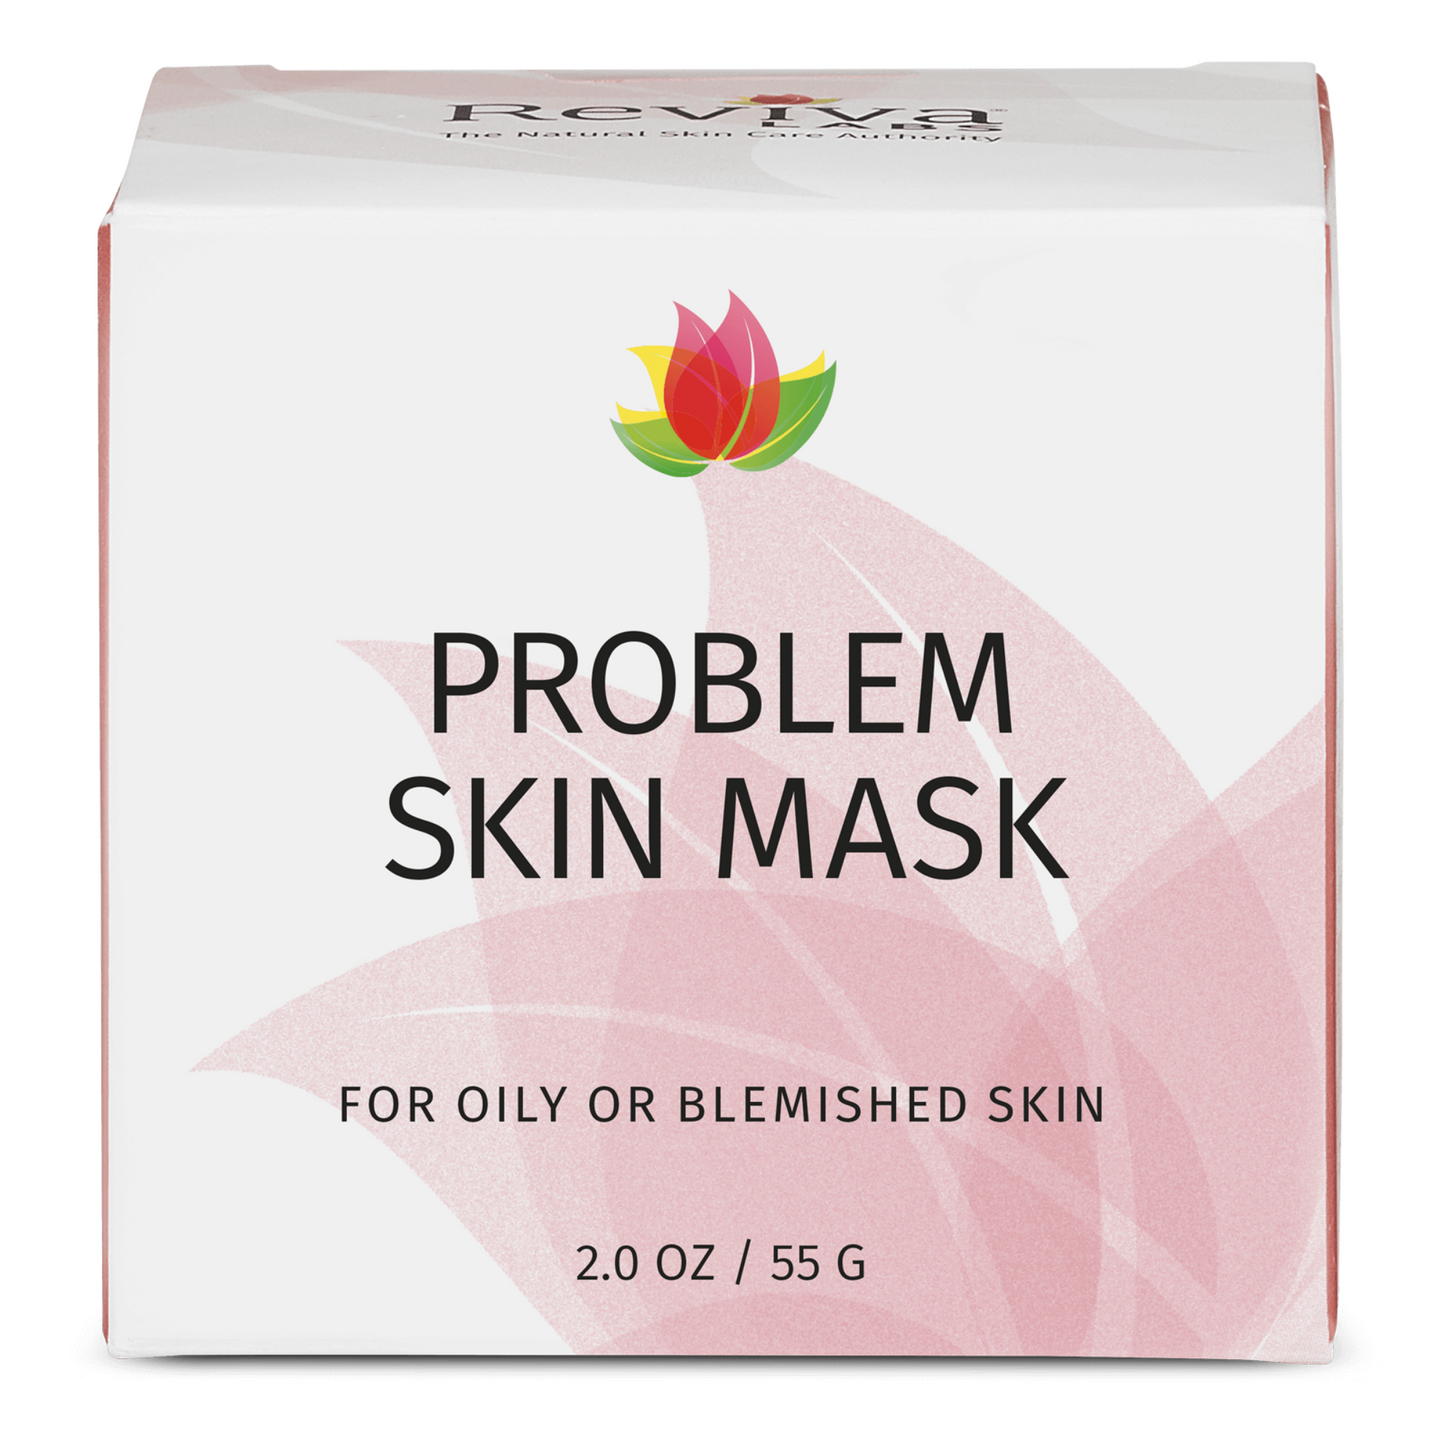 Primary Image of Problem Skin Mask